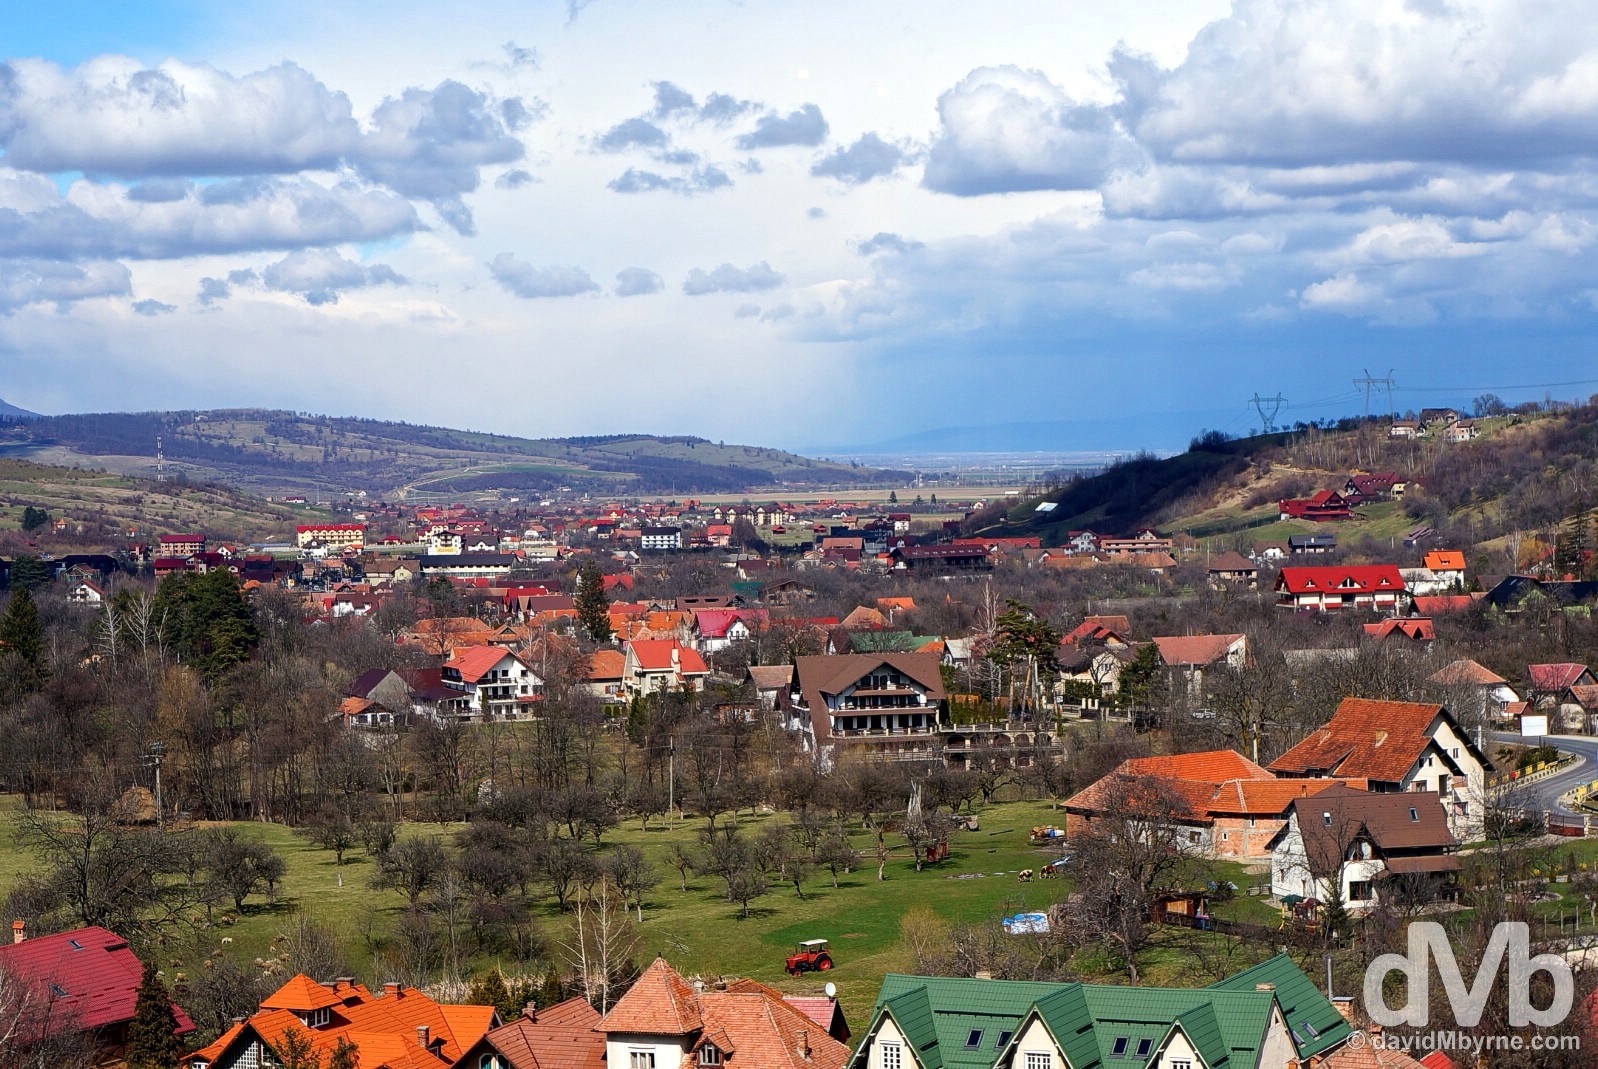 The countryside as seen from Bran Castle, Bran, Transylvania, Romania. April 2, 2015.